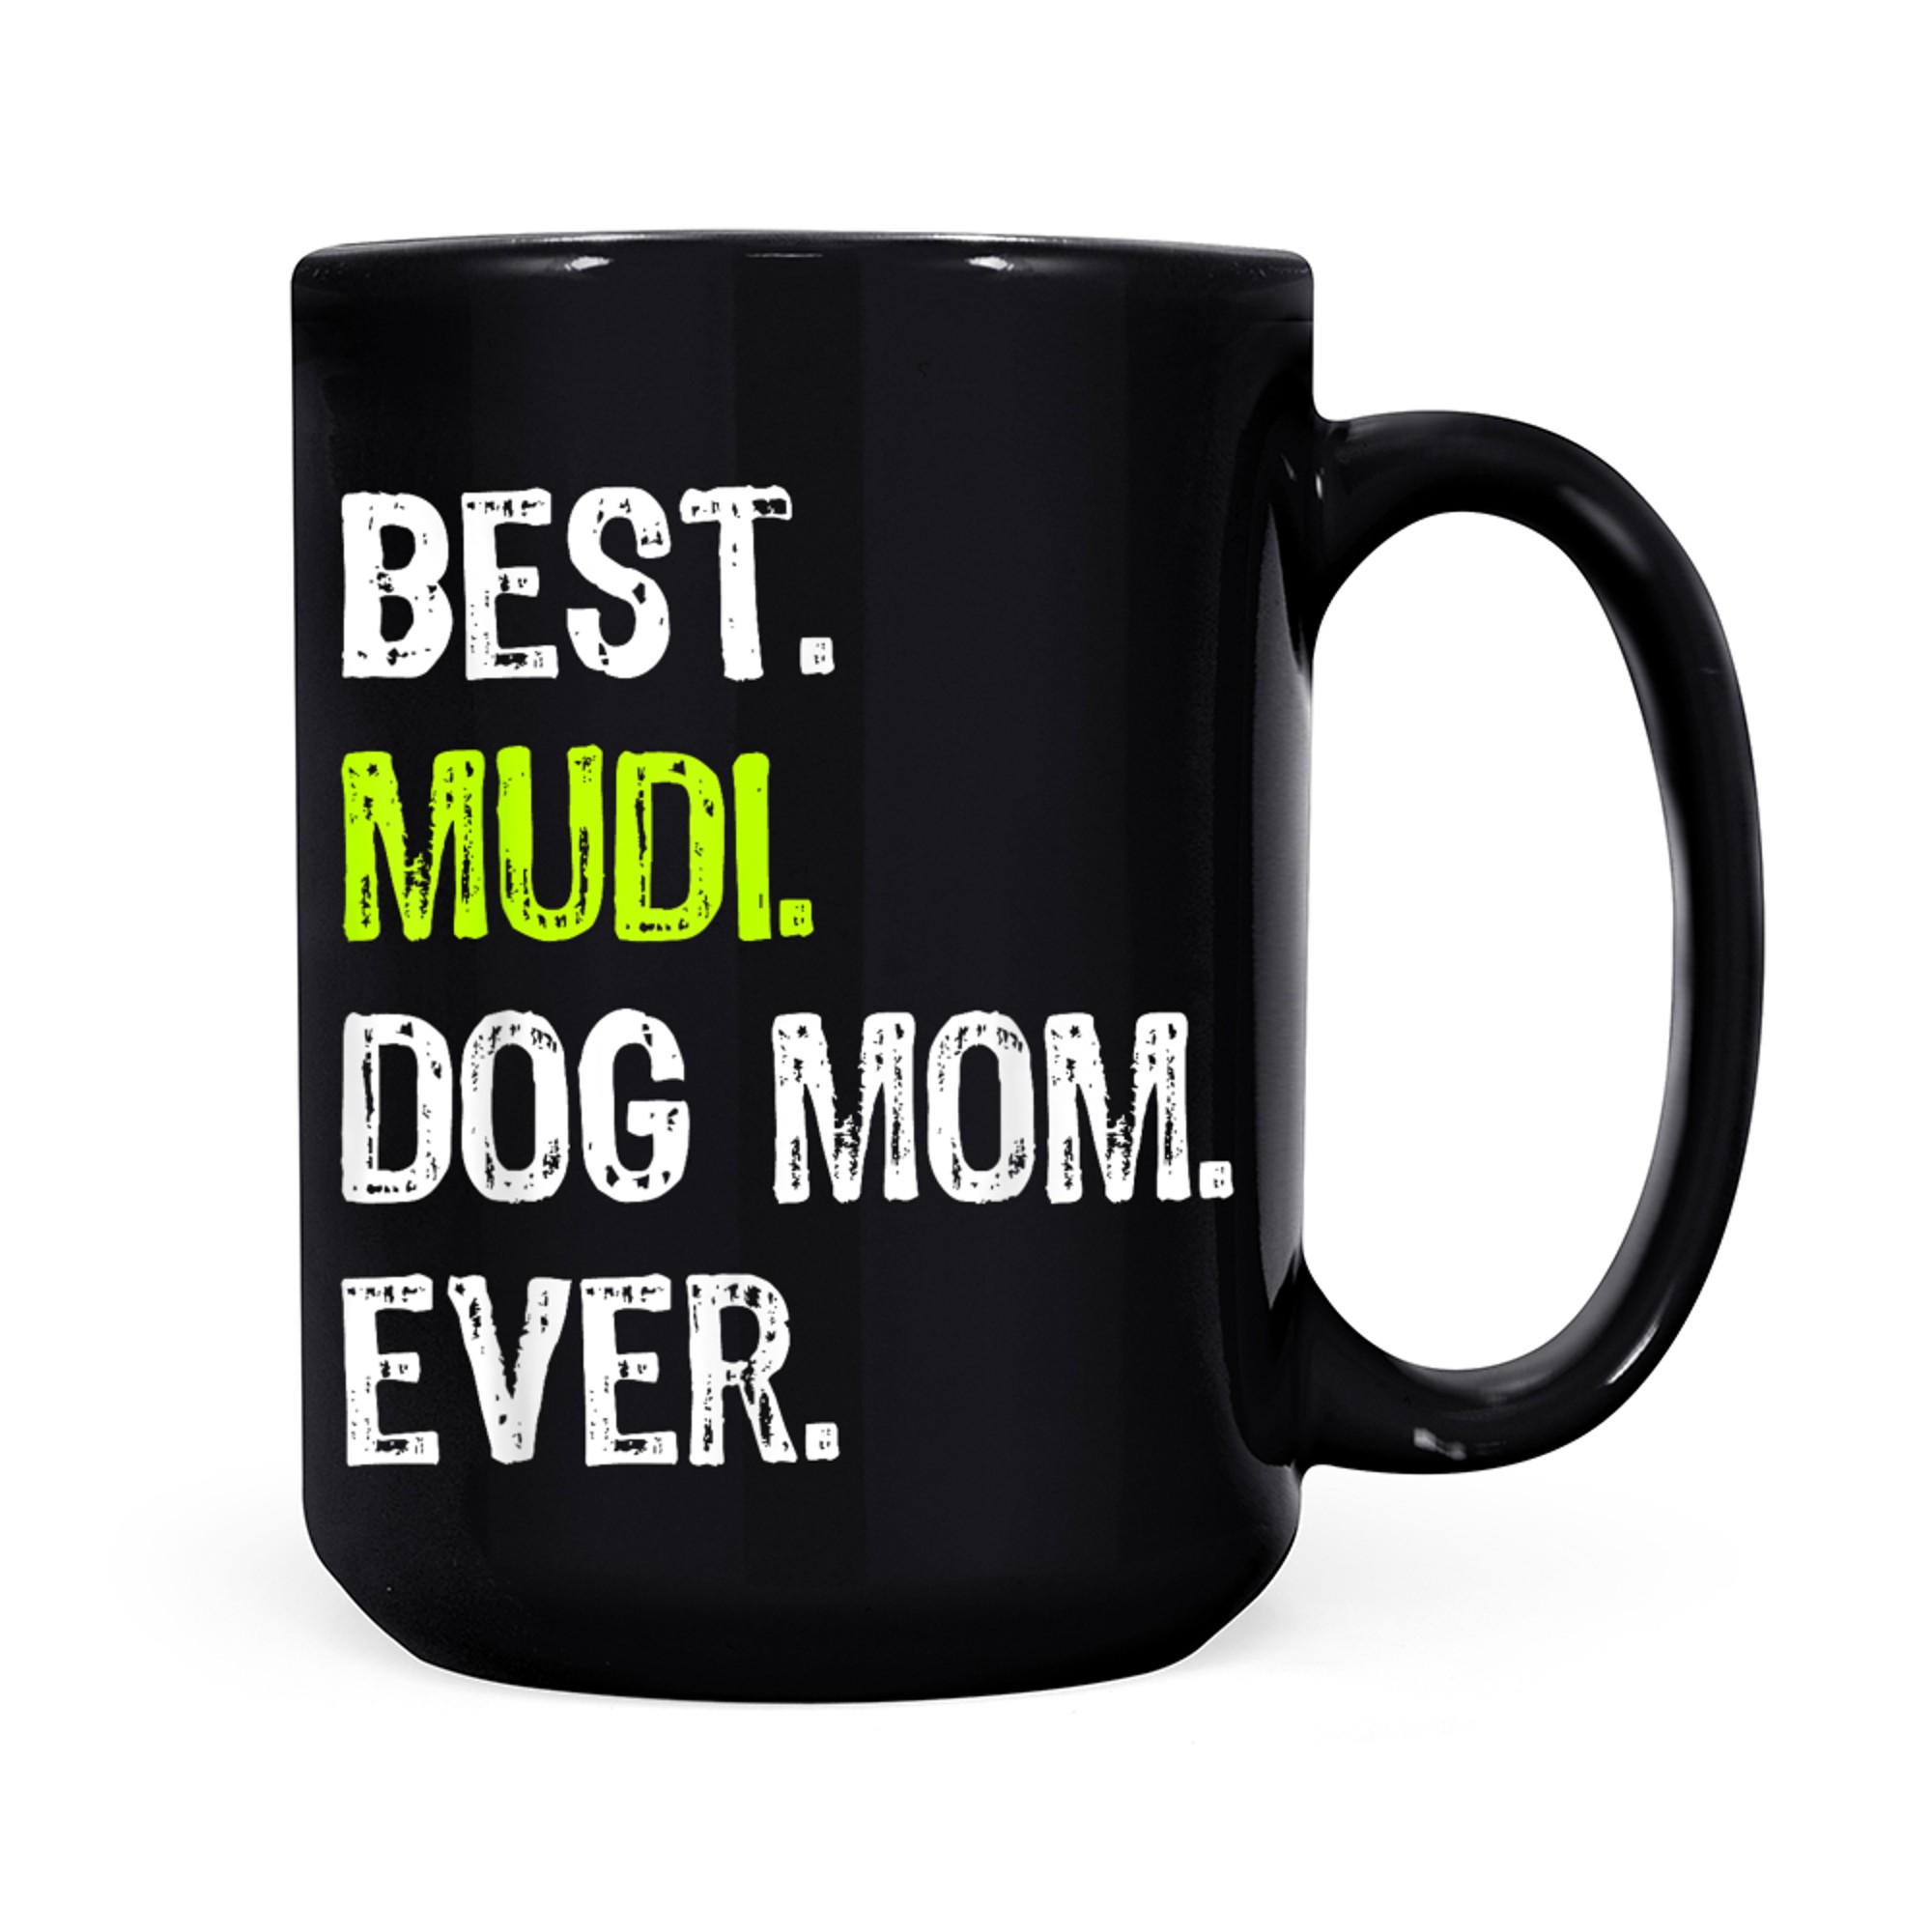 Best Mudi Dog MOM Ever Dog Lovers mug black